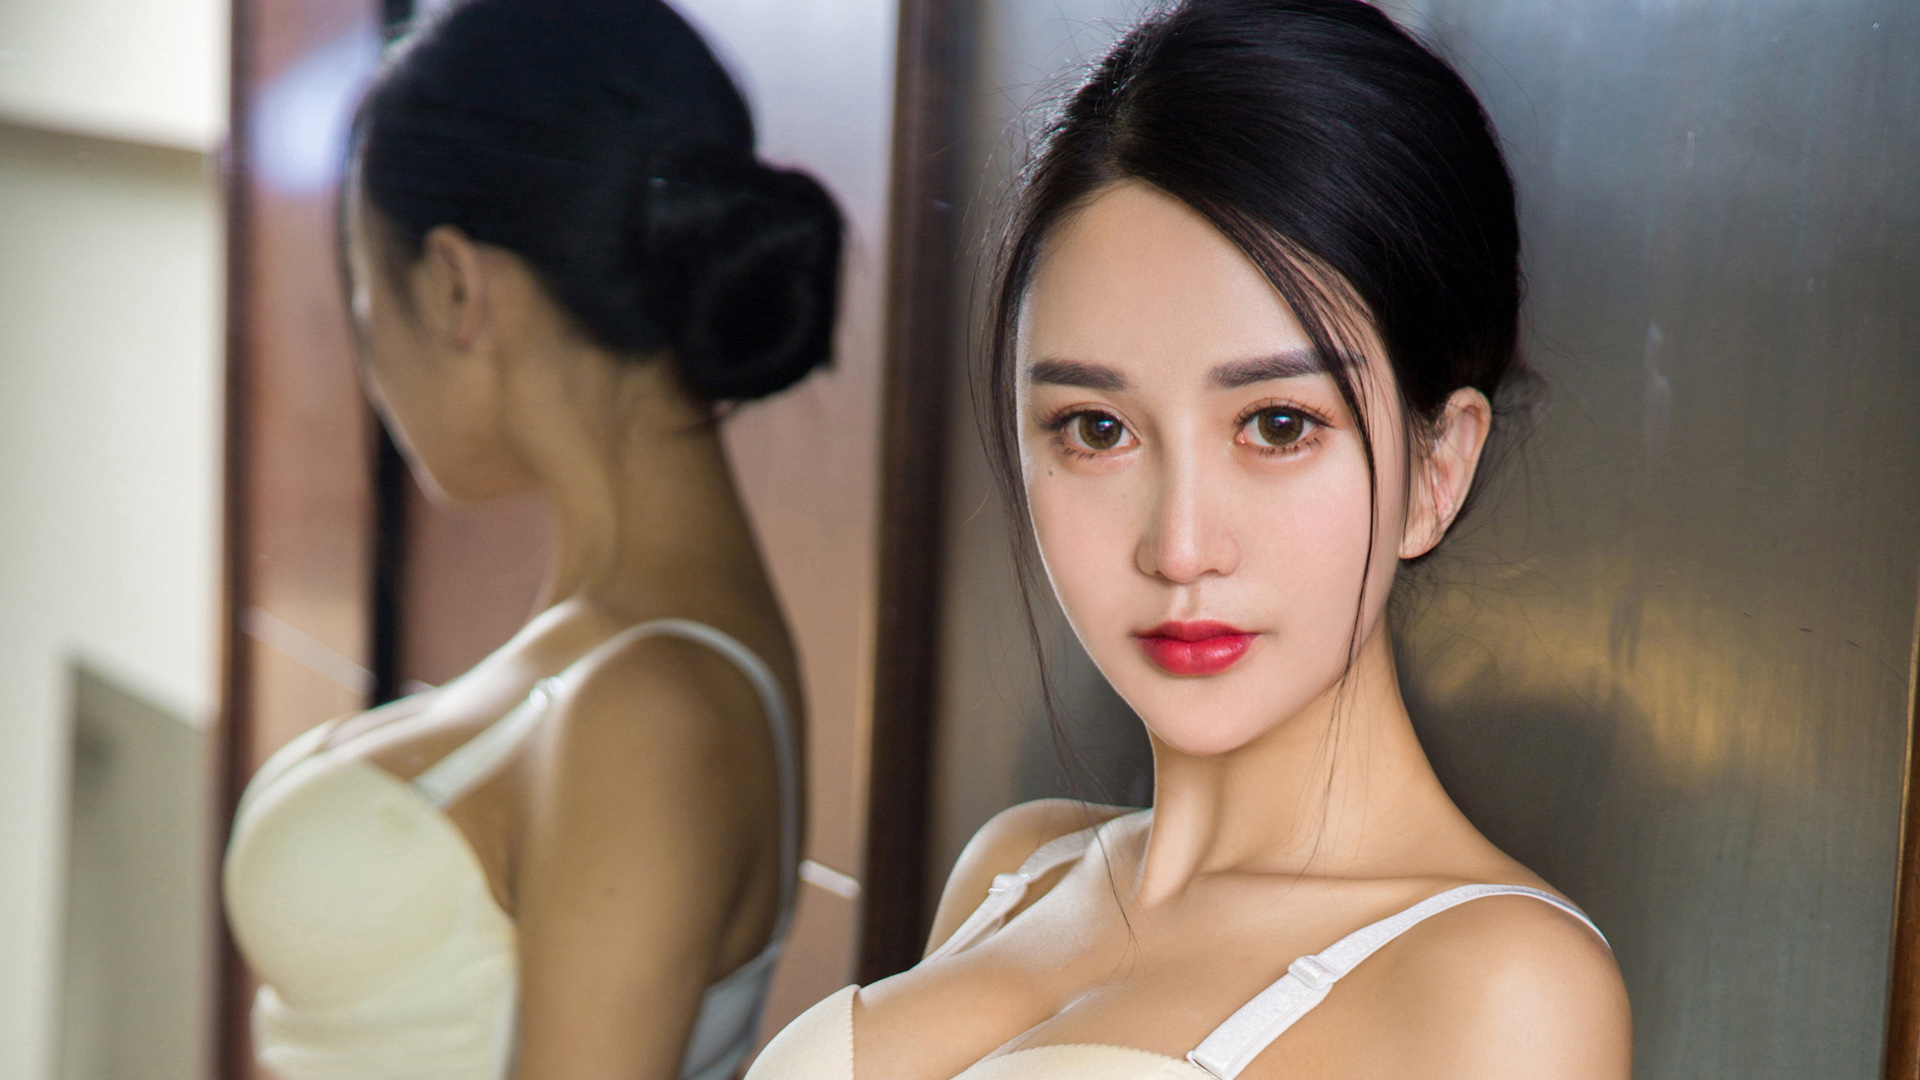 People 1920x1080 women model photography Asian portrait dark hair red lipstick mirror reflection